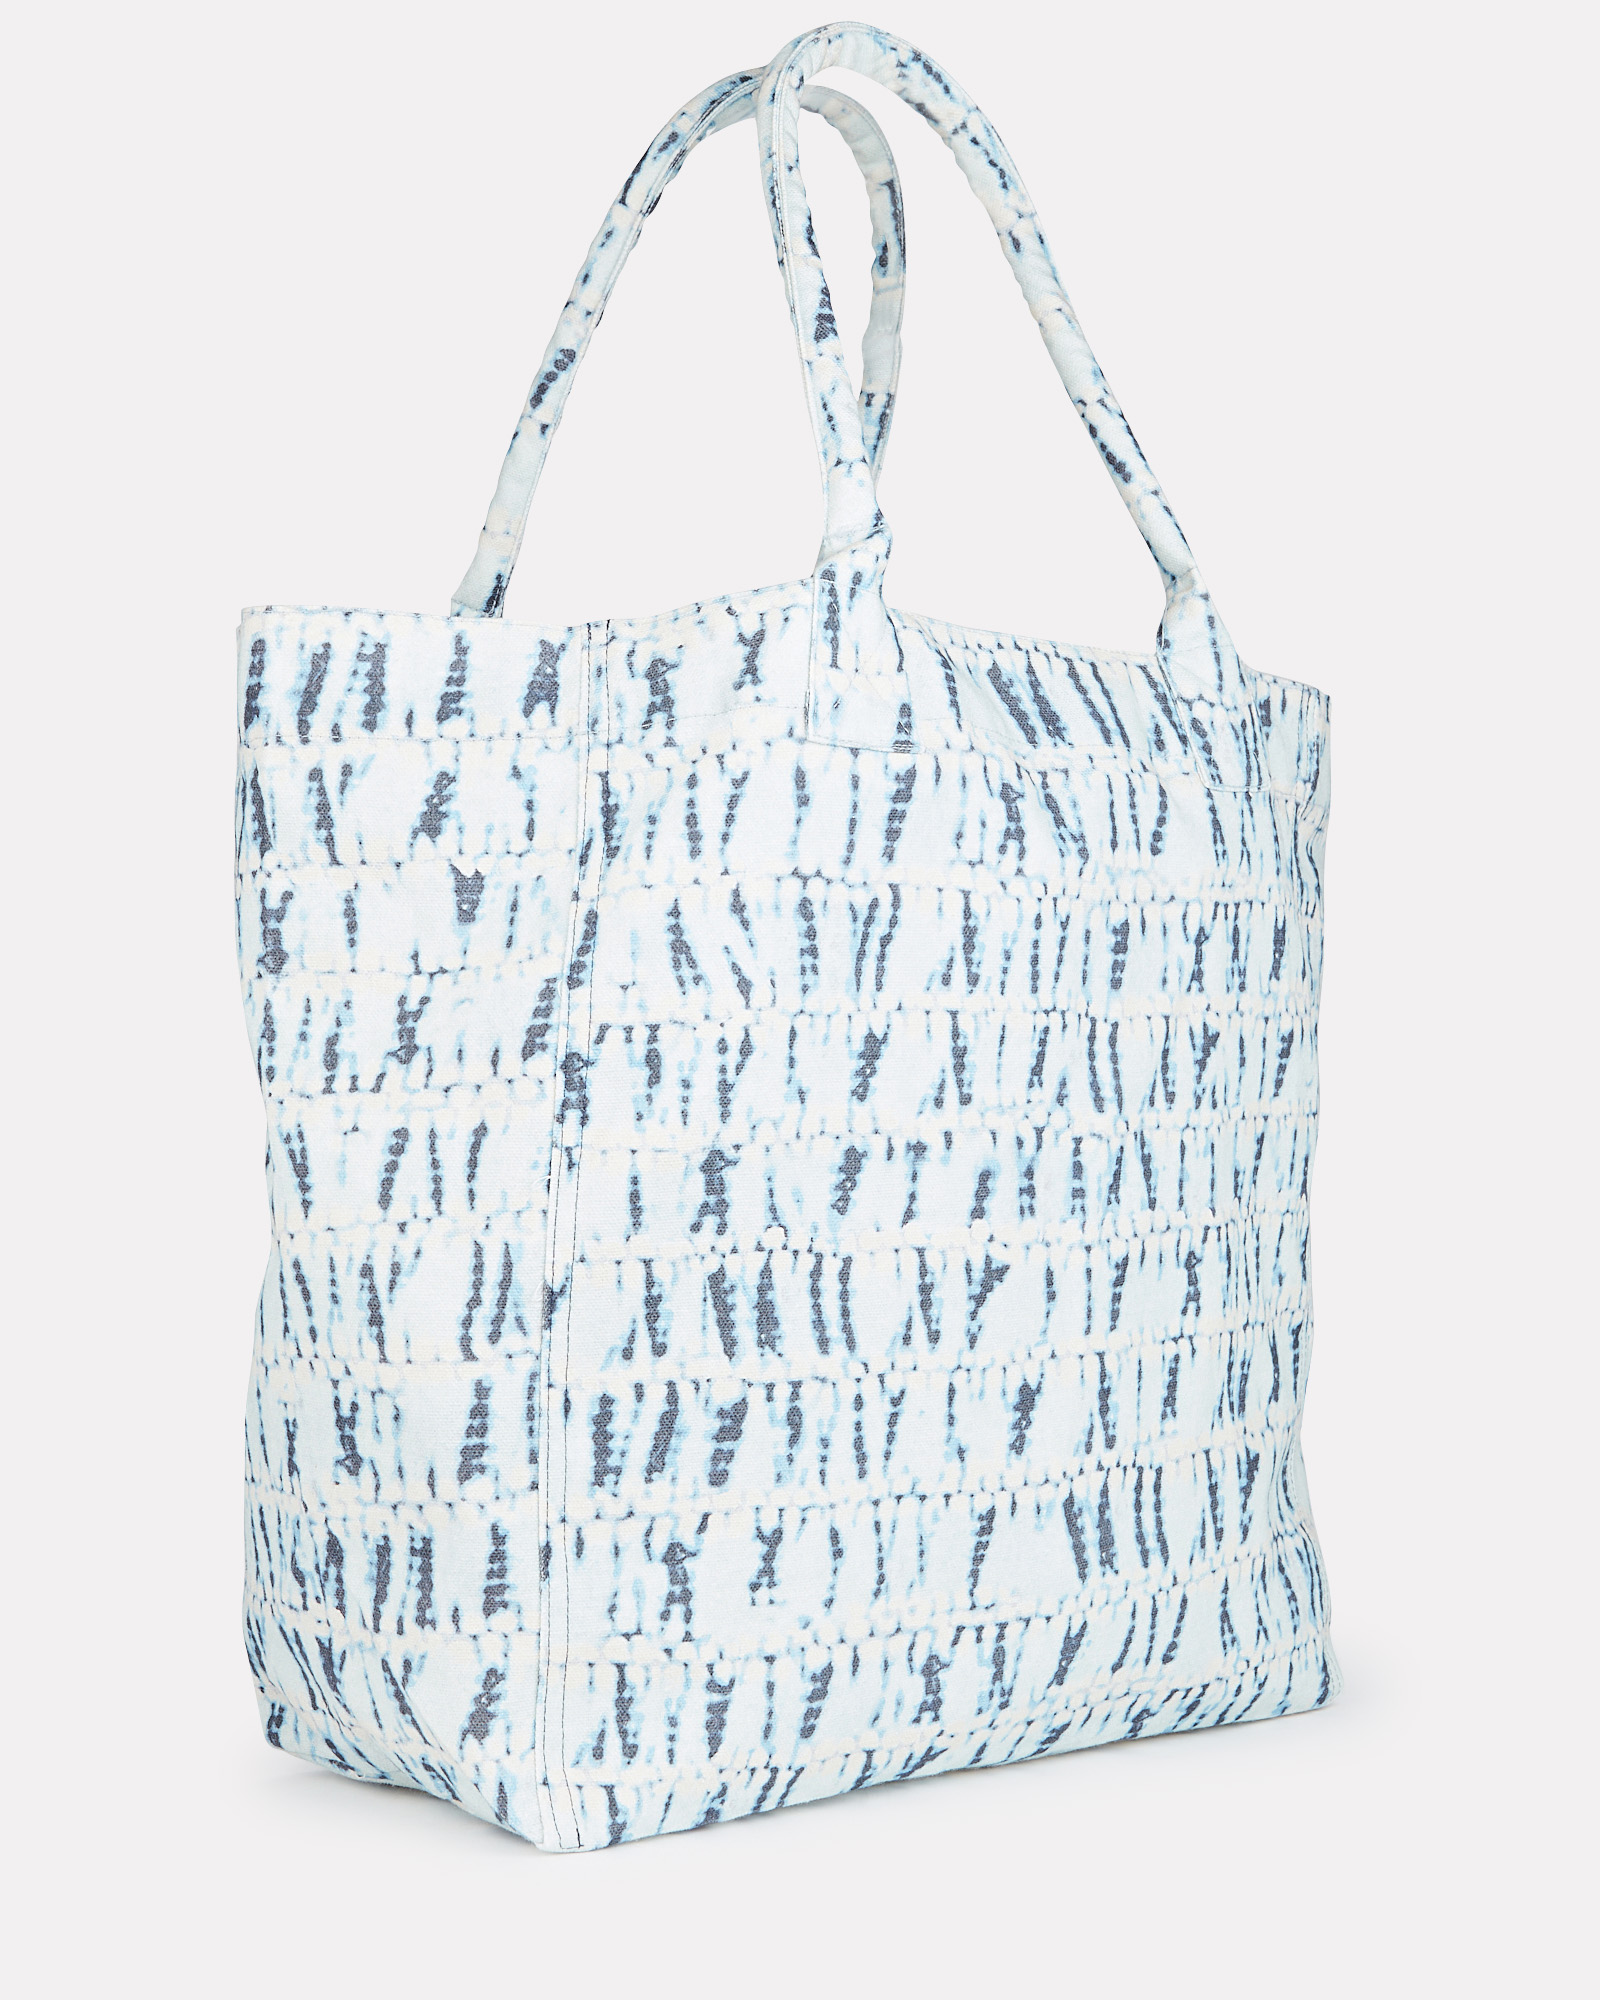 Isabel Marant Yenky Logo Canvas Tote Bag | INTERMIX®